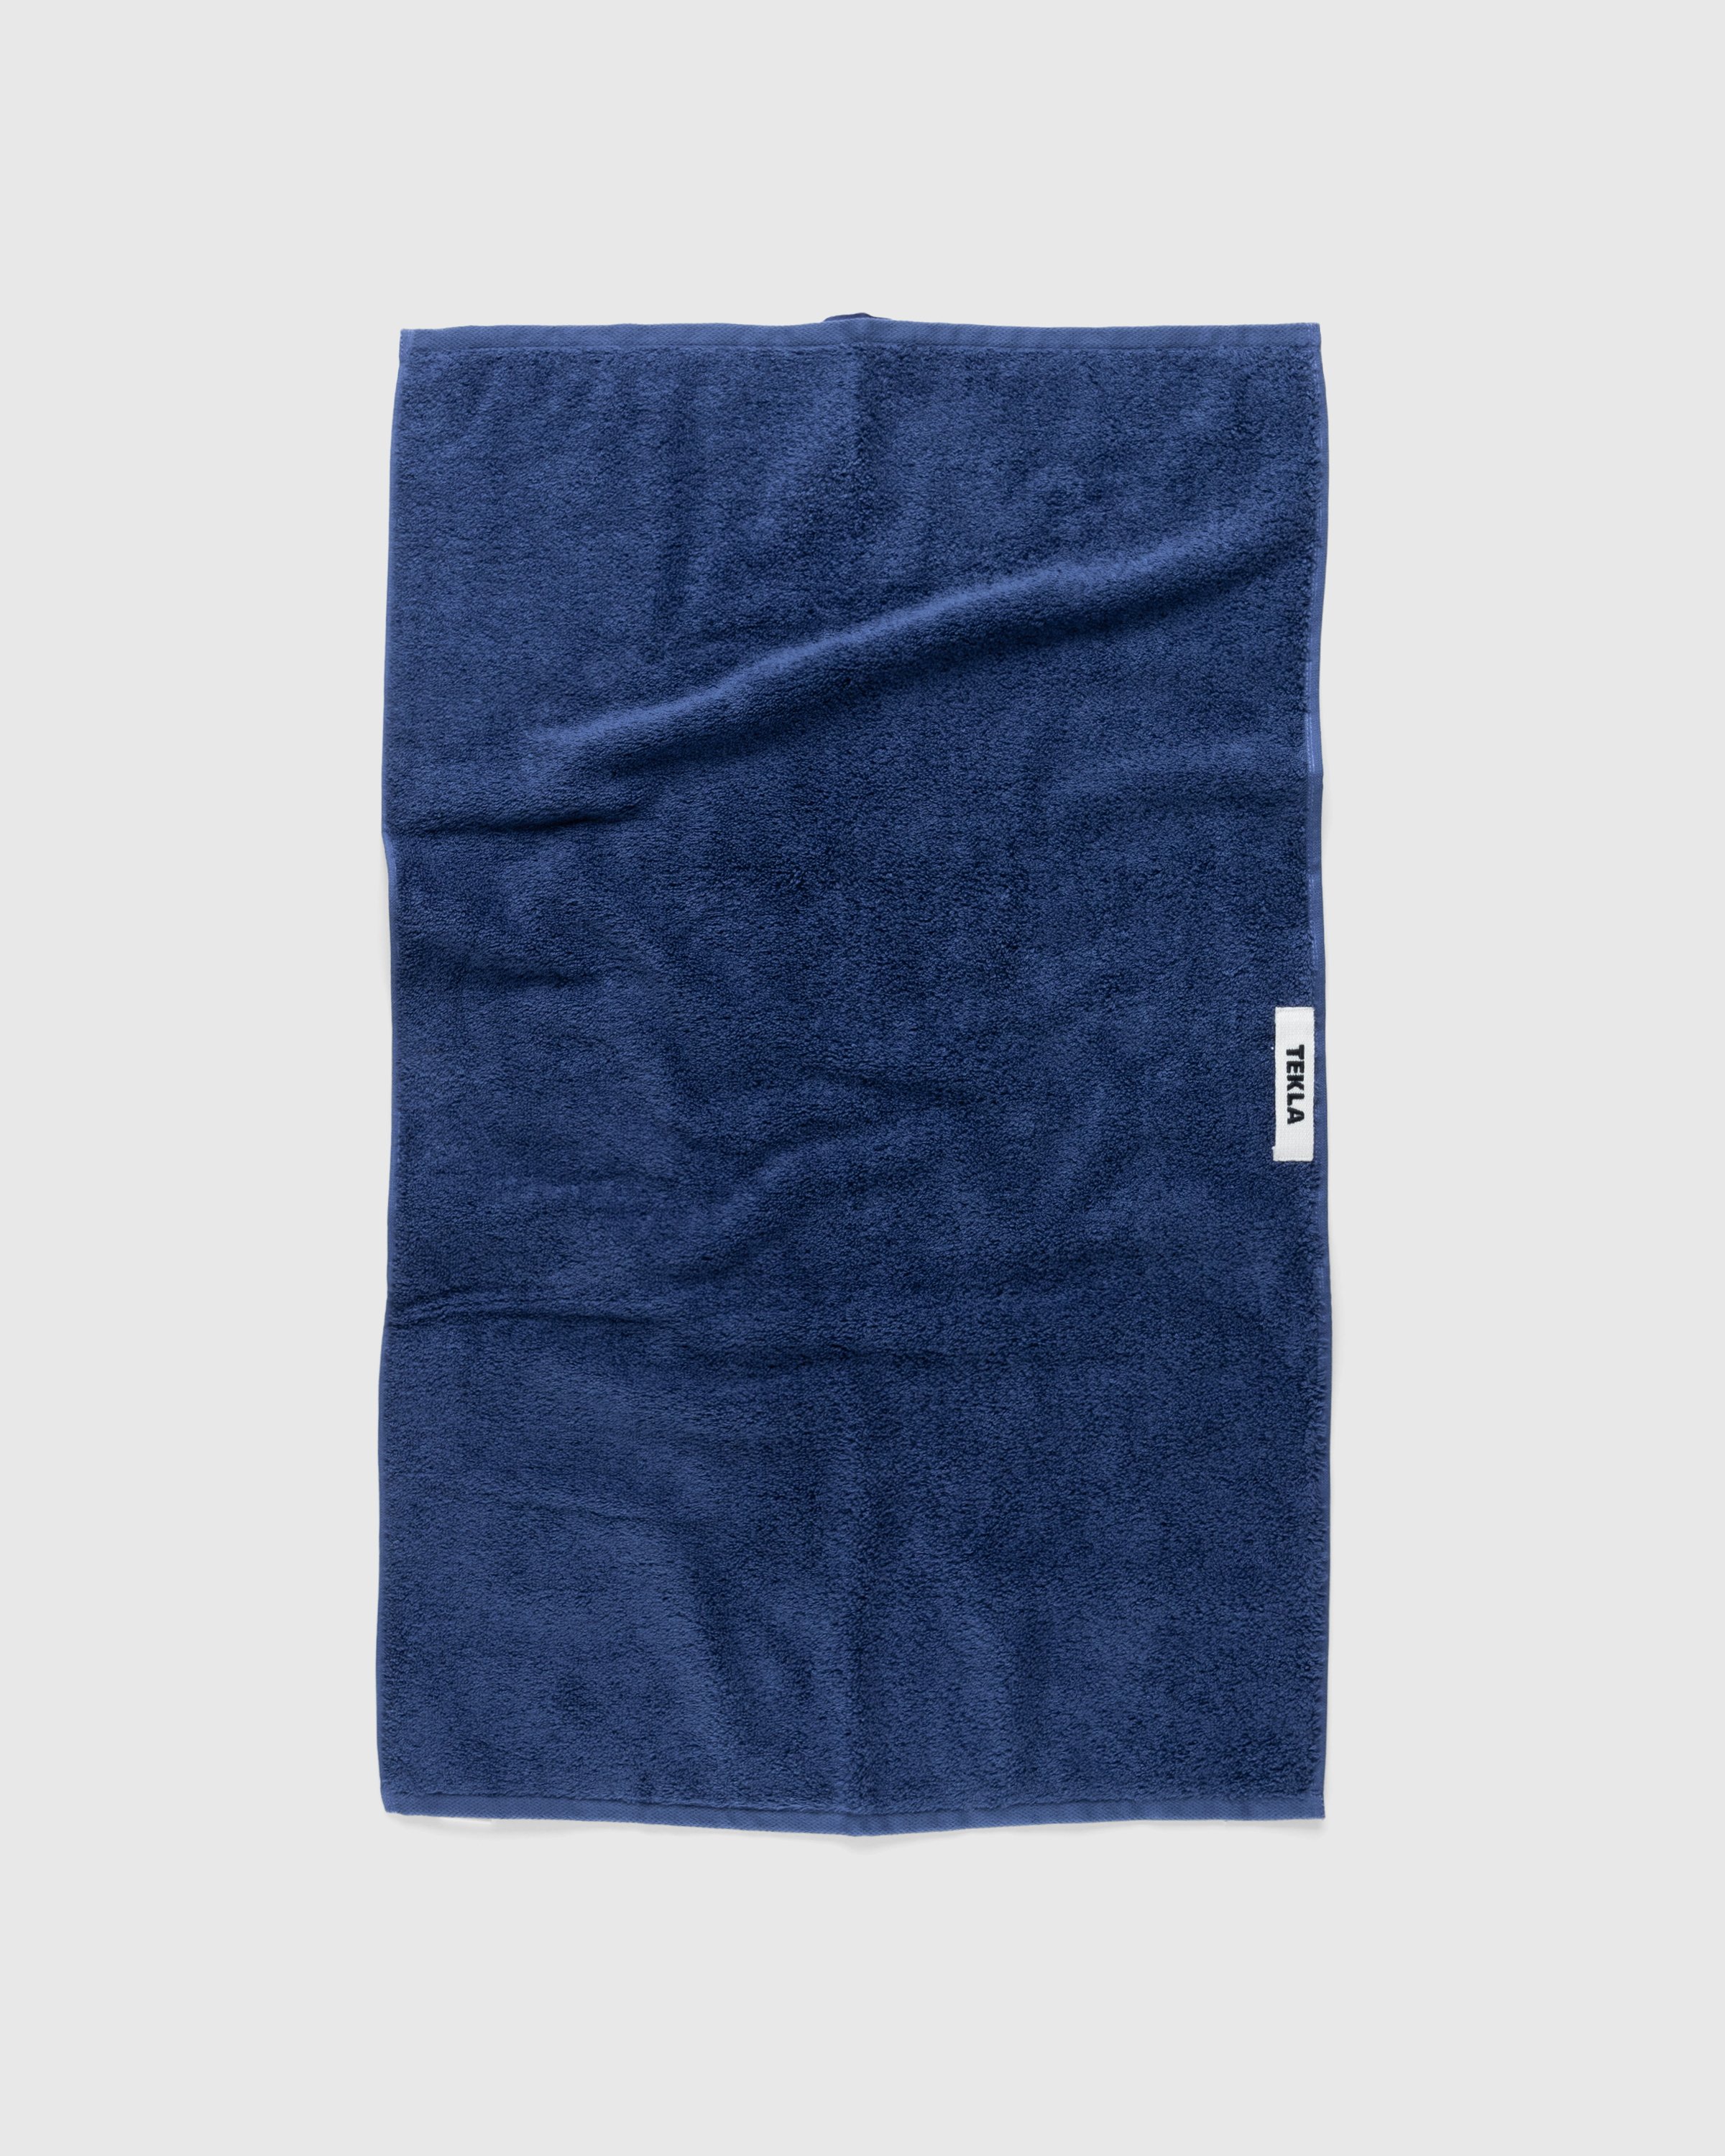 Tekla - Hand Towel 50x80 Navy - Lifestyle - Blue - Image 1